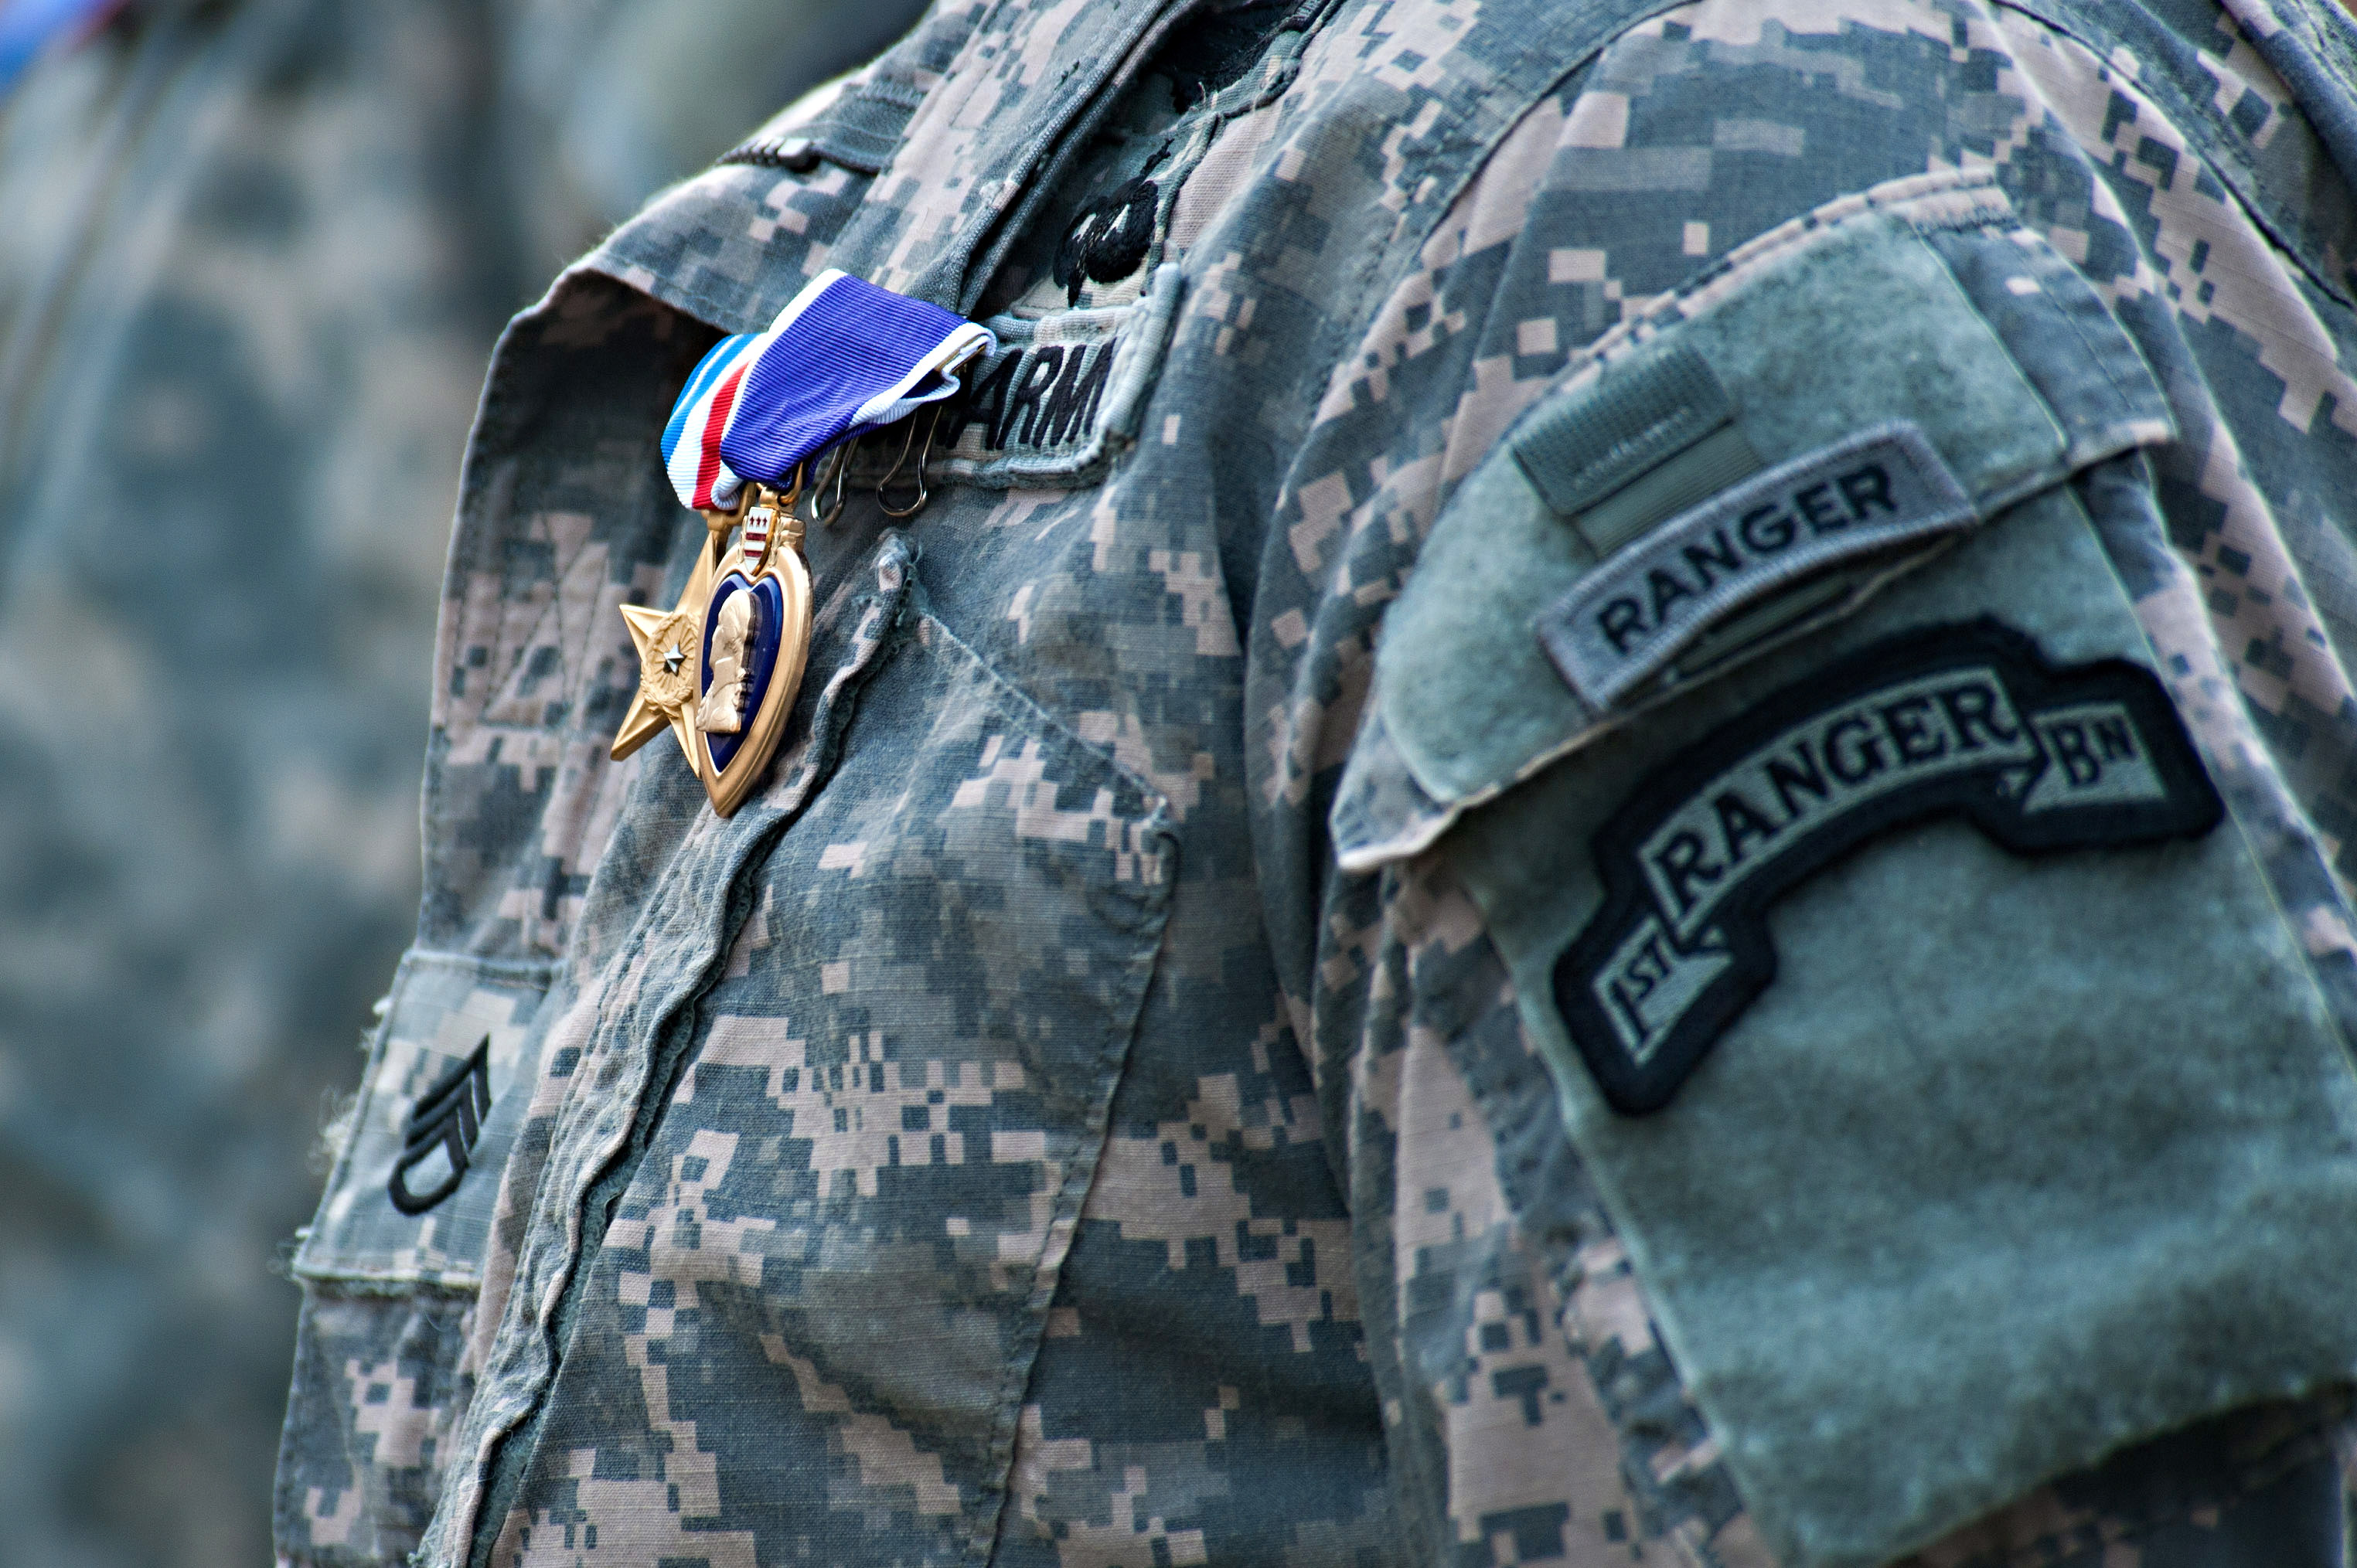 3049x2029 Rangers 75th Ranger Regiment Photo Gallery